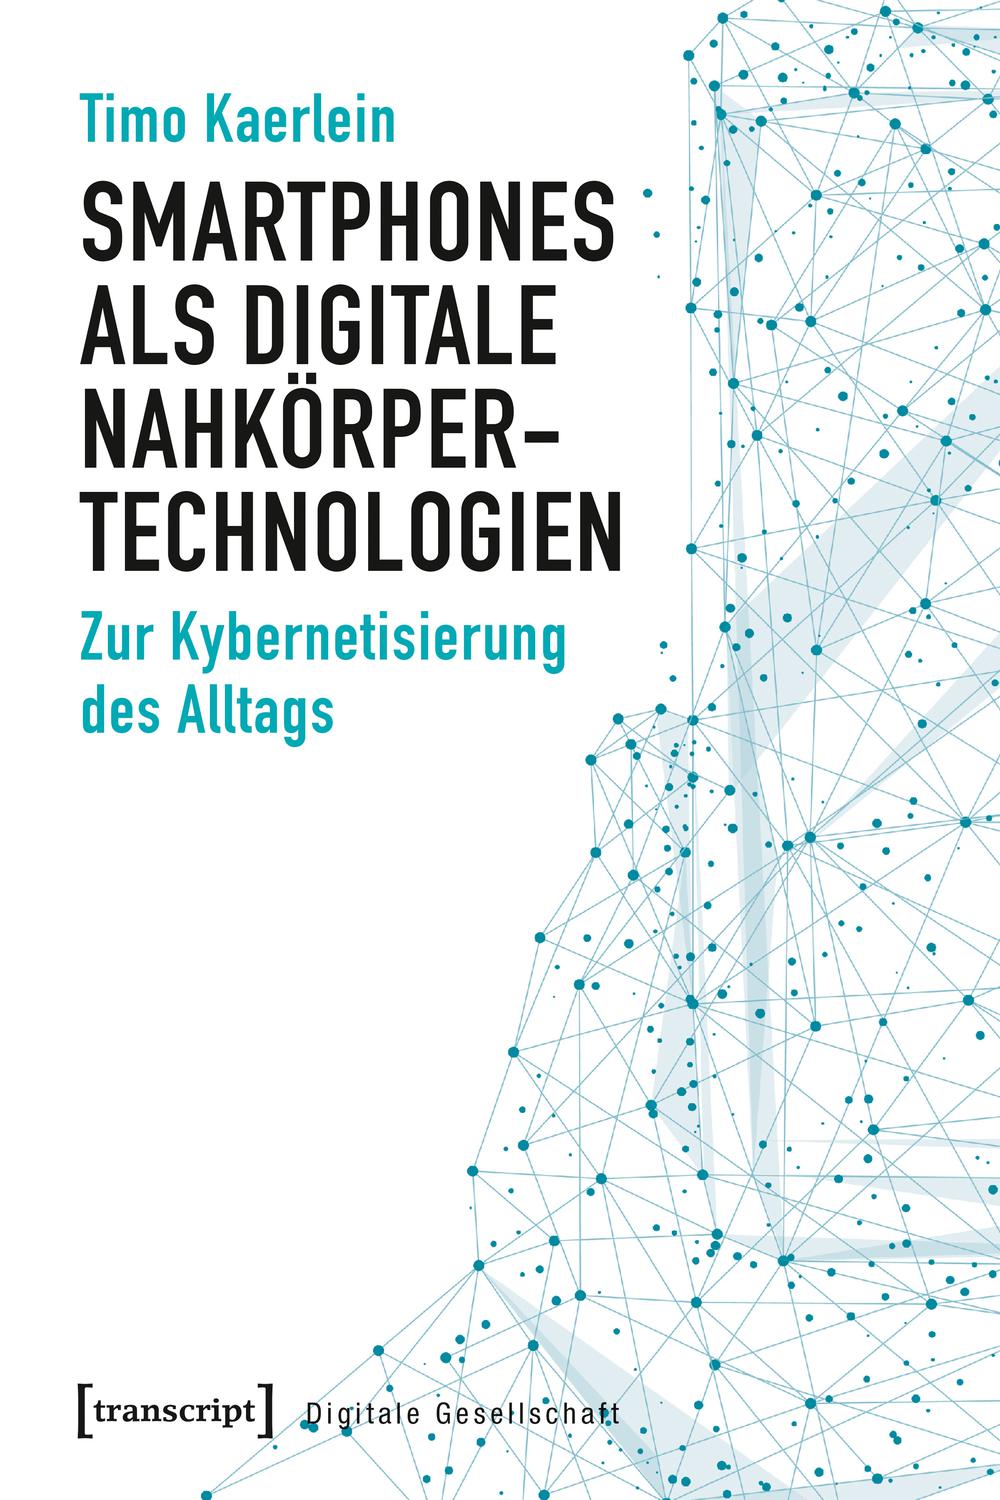 Smartphones als digitale Nahkörpertechnologien - Timo Kaerlein